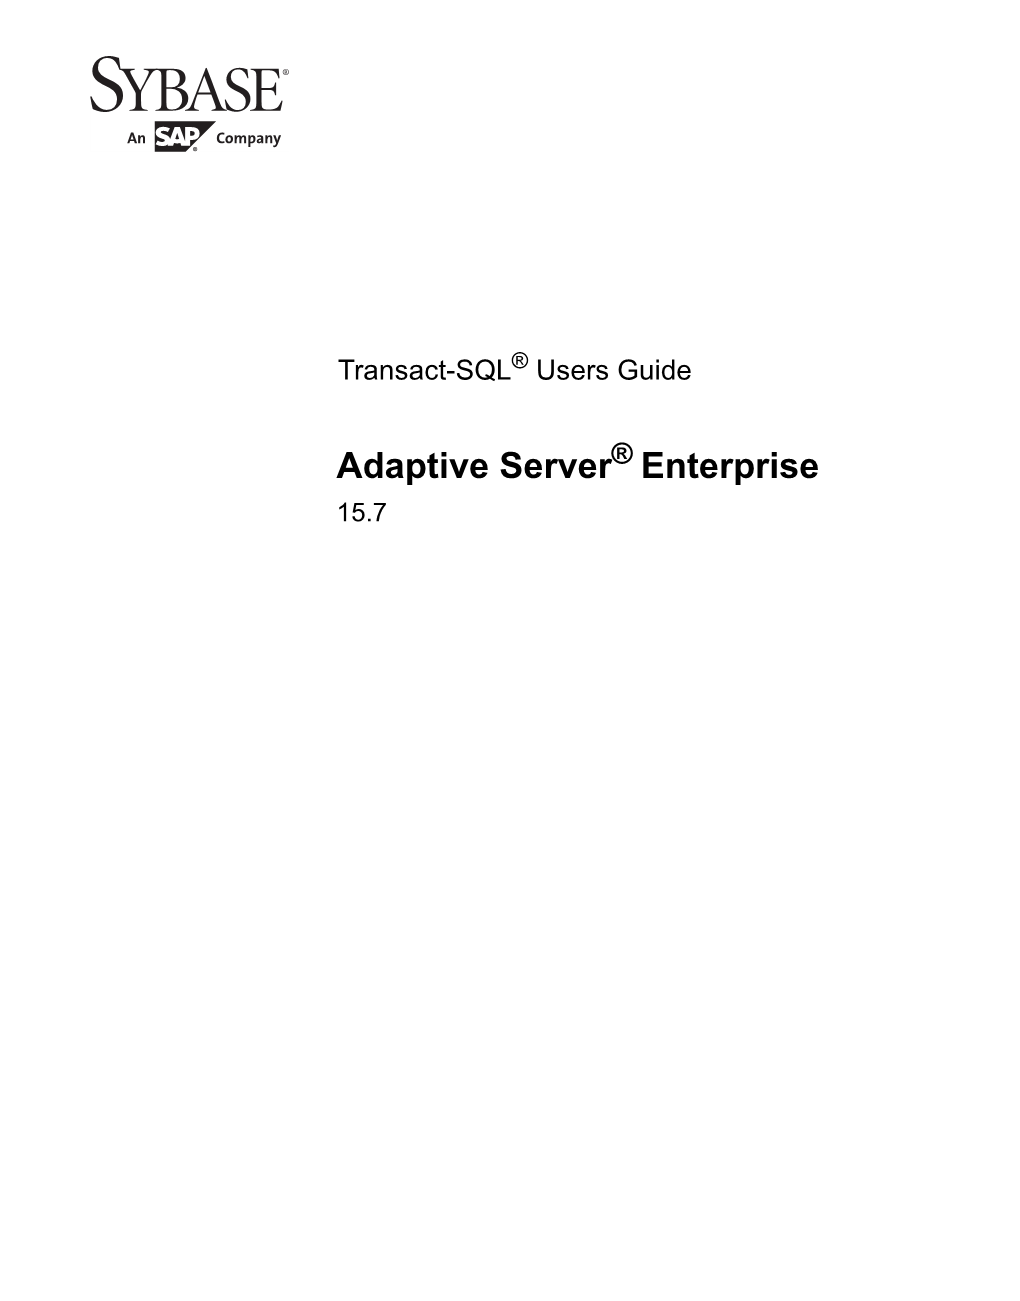 Adaptive Server Enterprise Contents